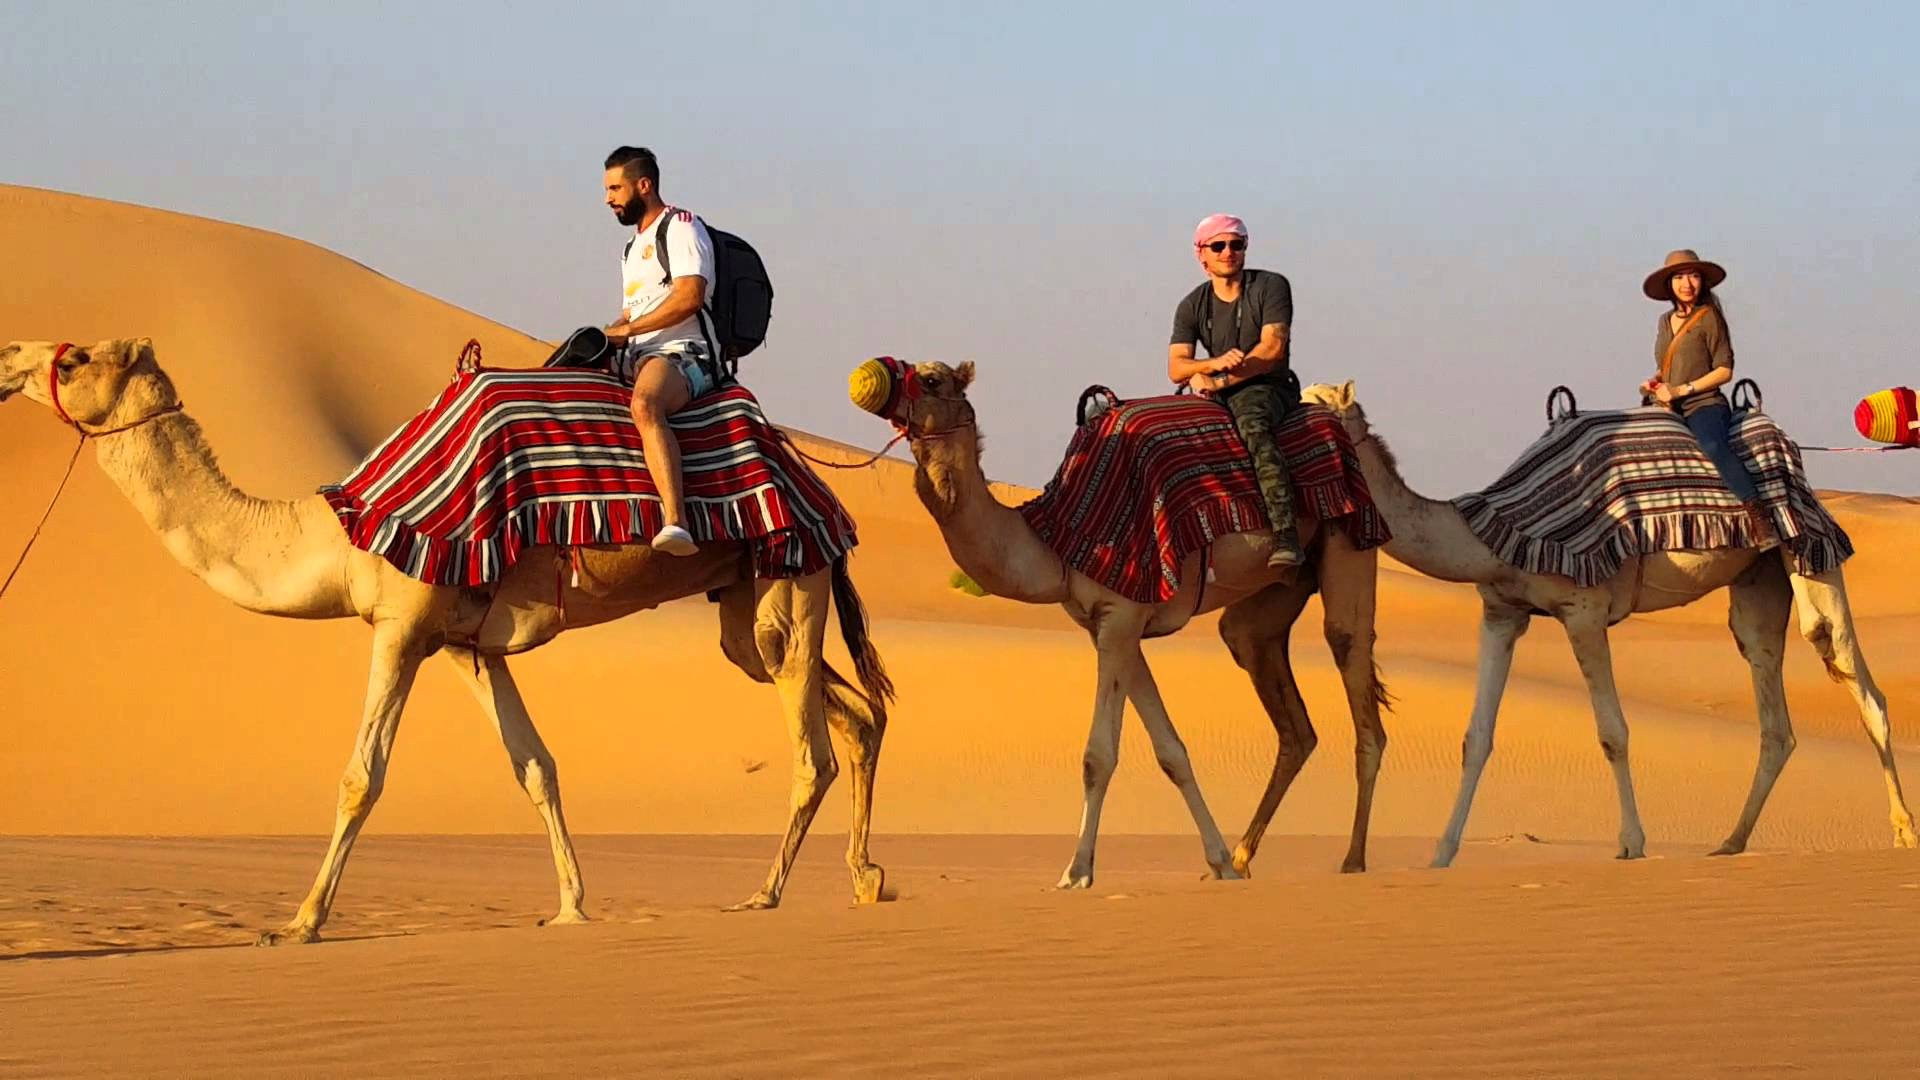 Camel riding at the Abu Dhabi desert - YouTube